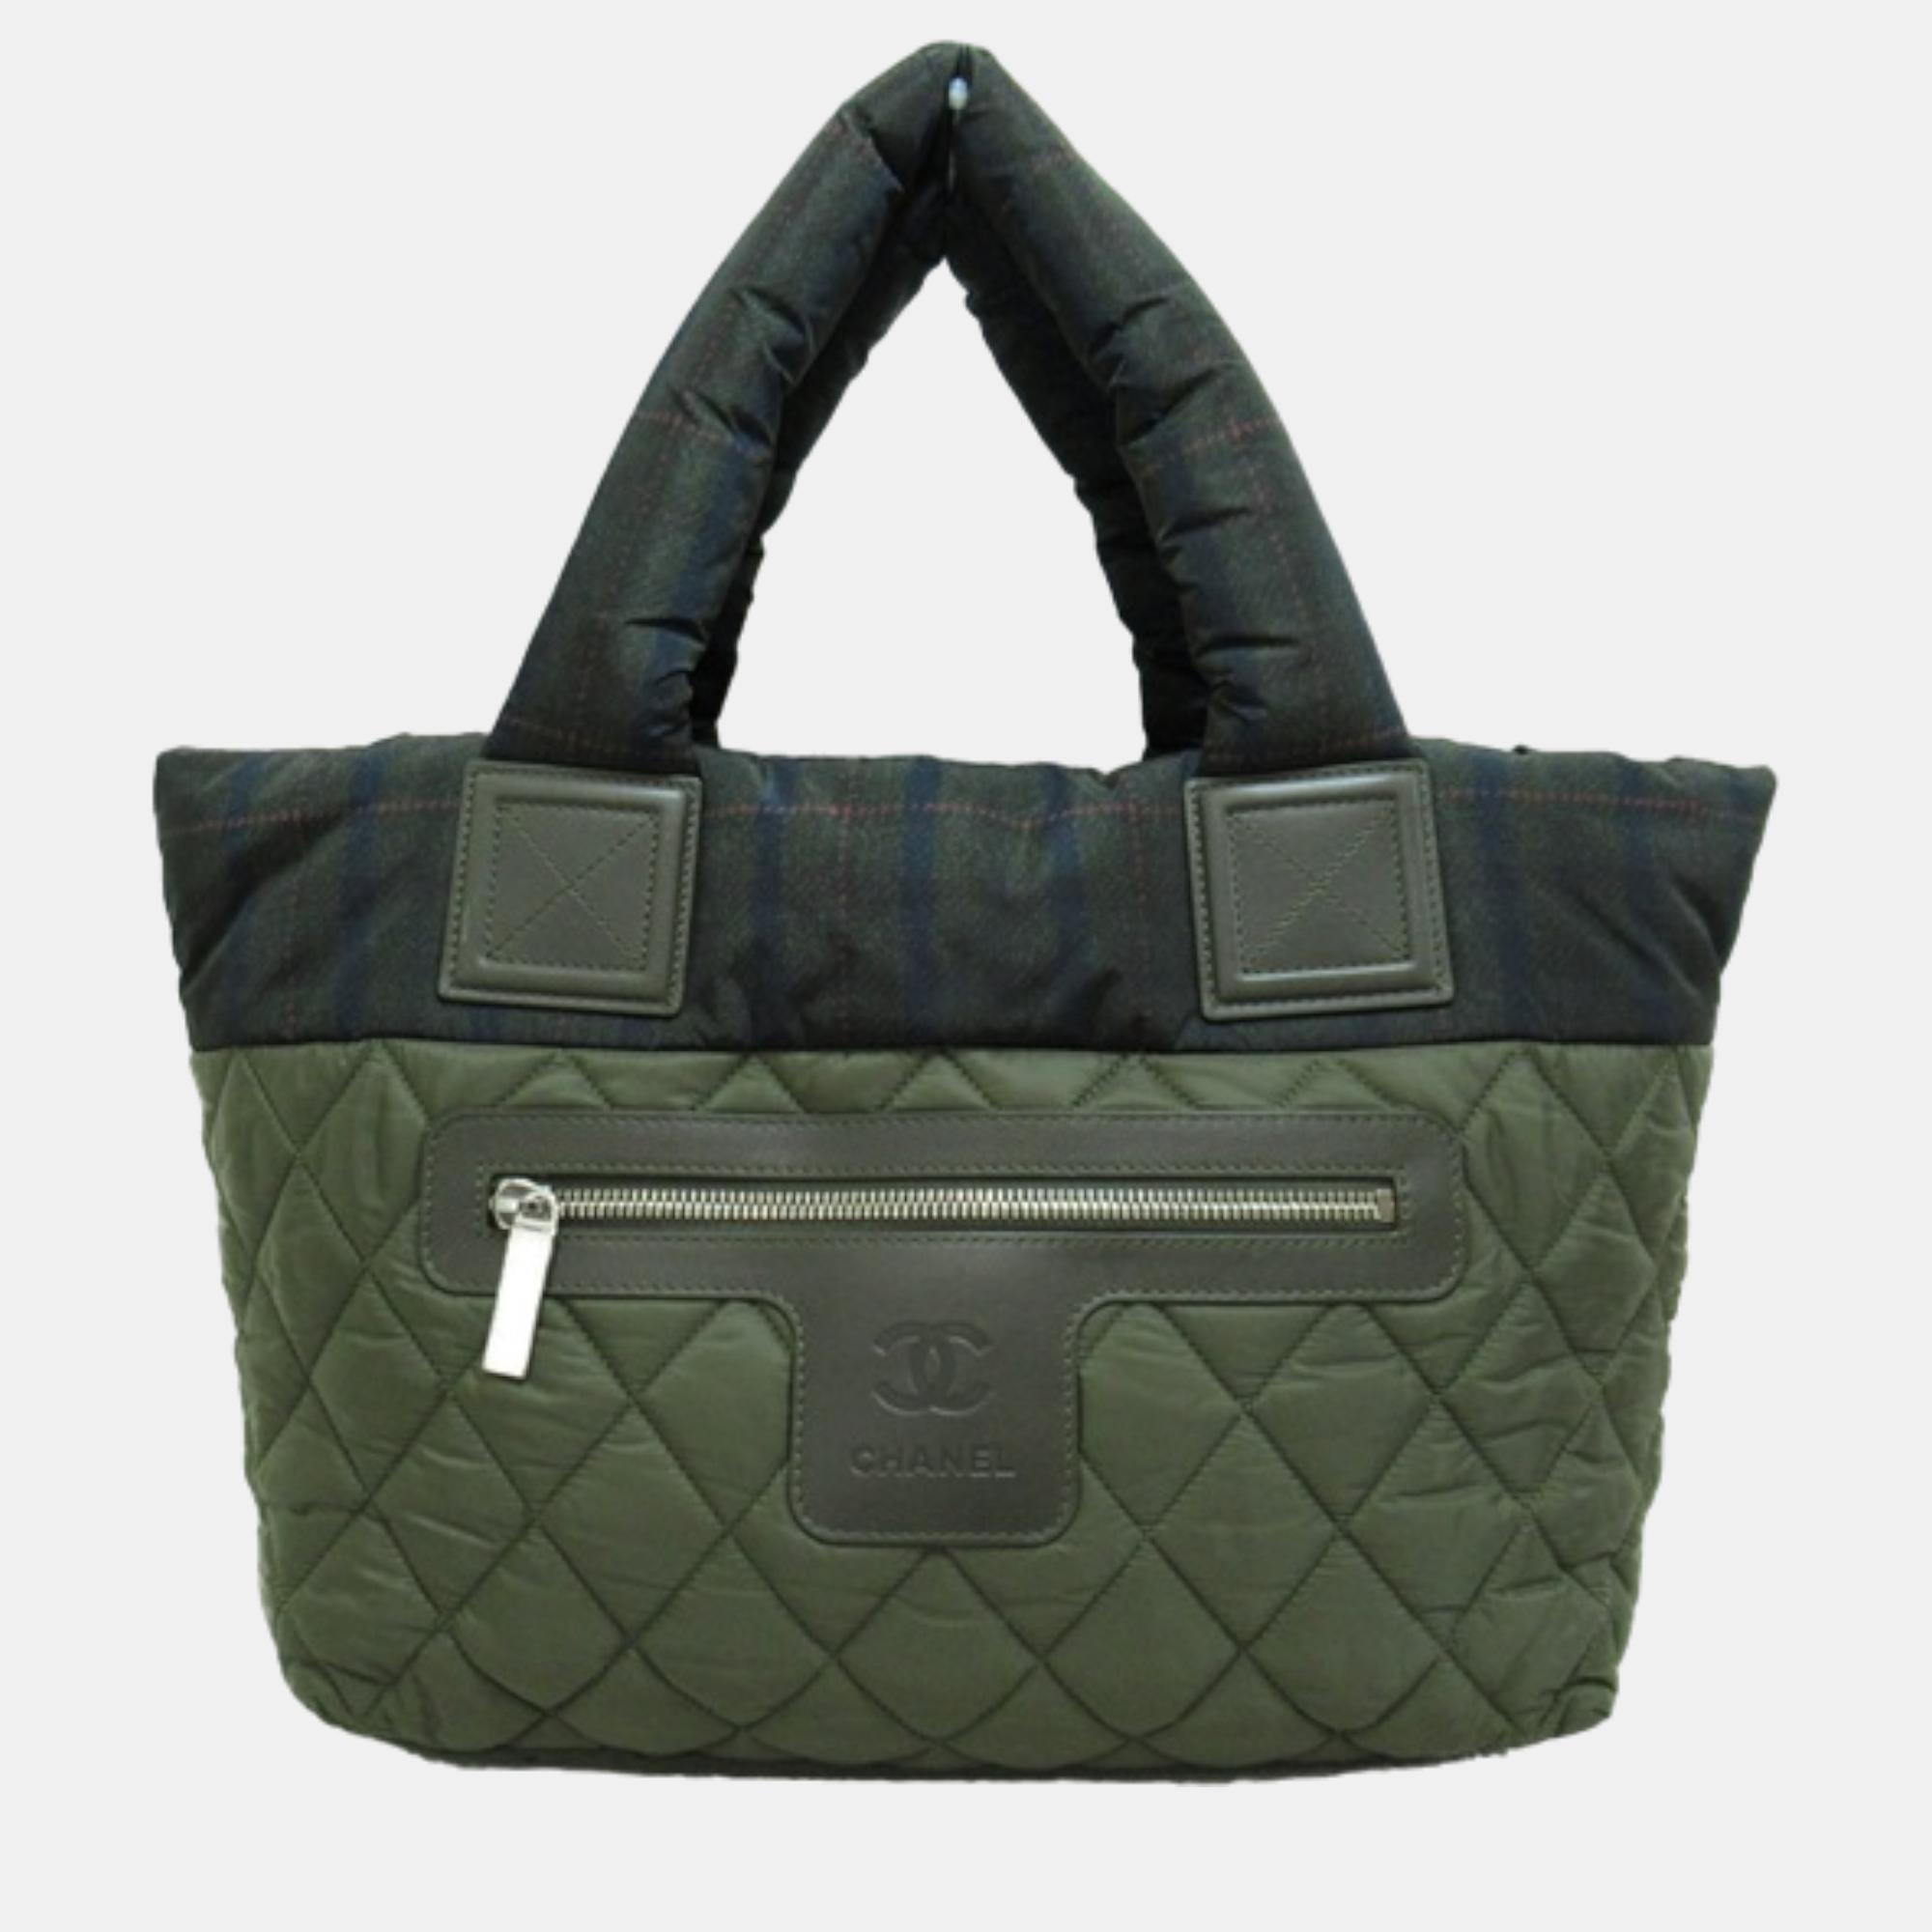 Chanel Green Nylon Coco Cocoon Tote Bag